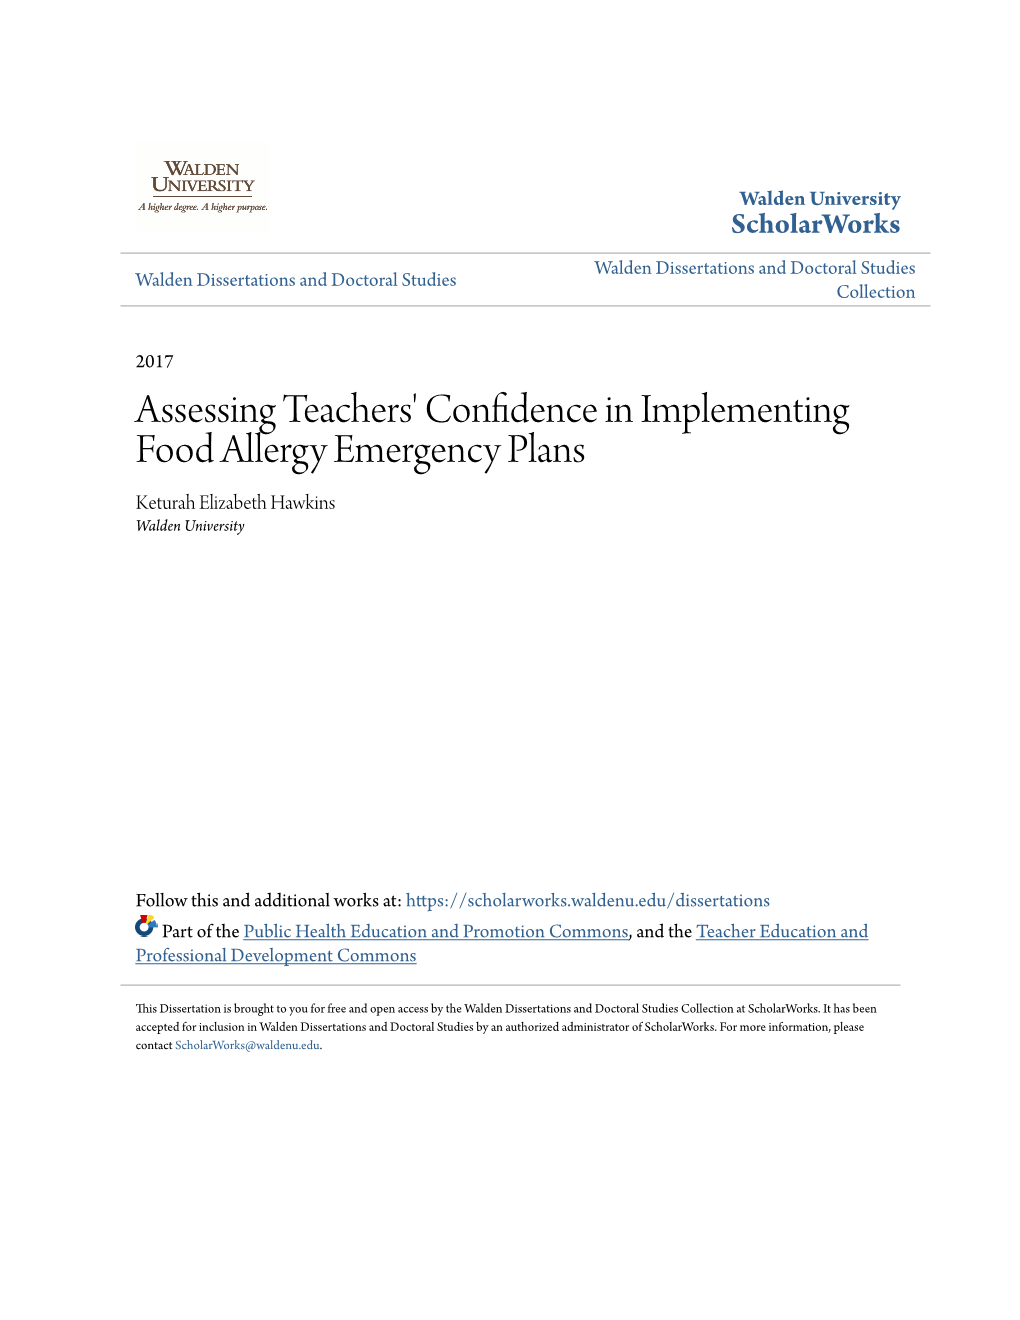 Assessing Teachers' Confidence in Implementing Food Allergy Emergency Plans Keturah Elizabeth Hawkins Walden University